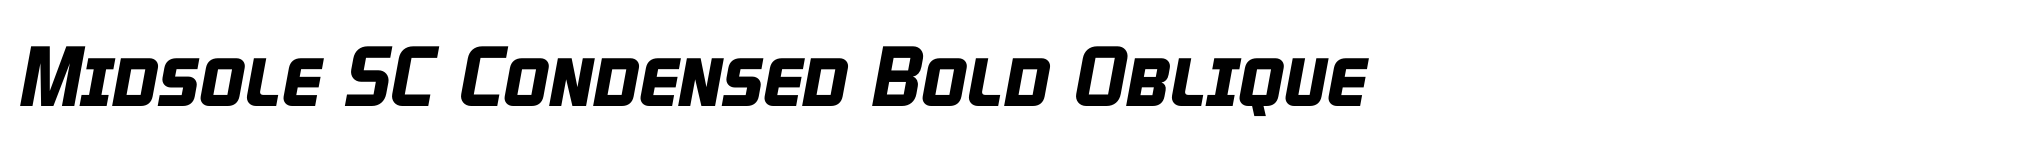 Midsole SC Condensed Bold Oblique image